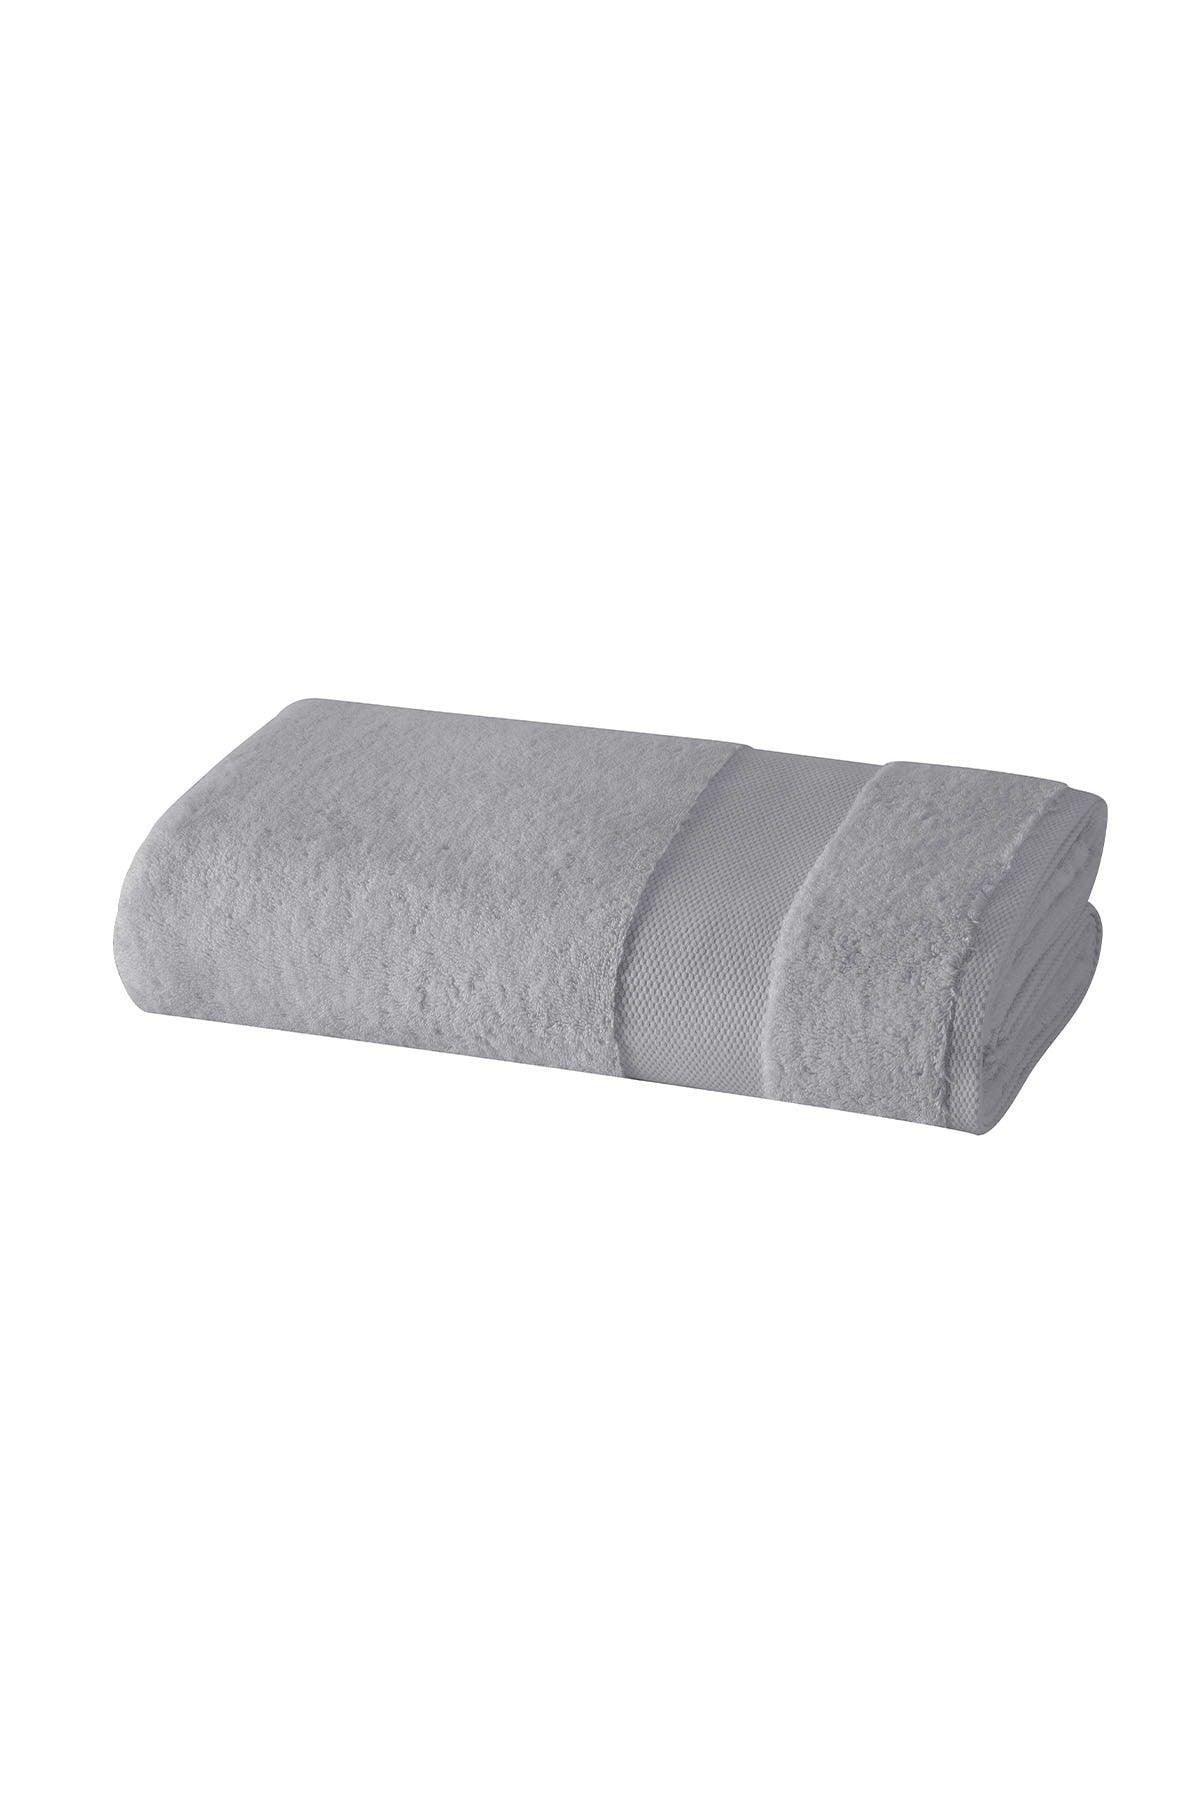 Bedding Essentials Bath Towel - Gray - Swordslife